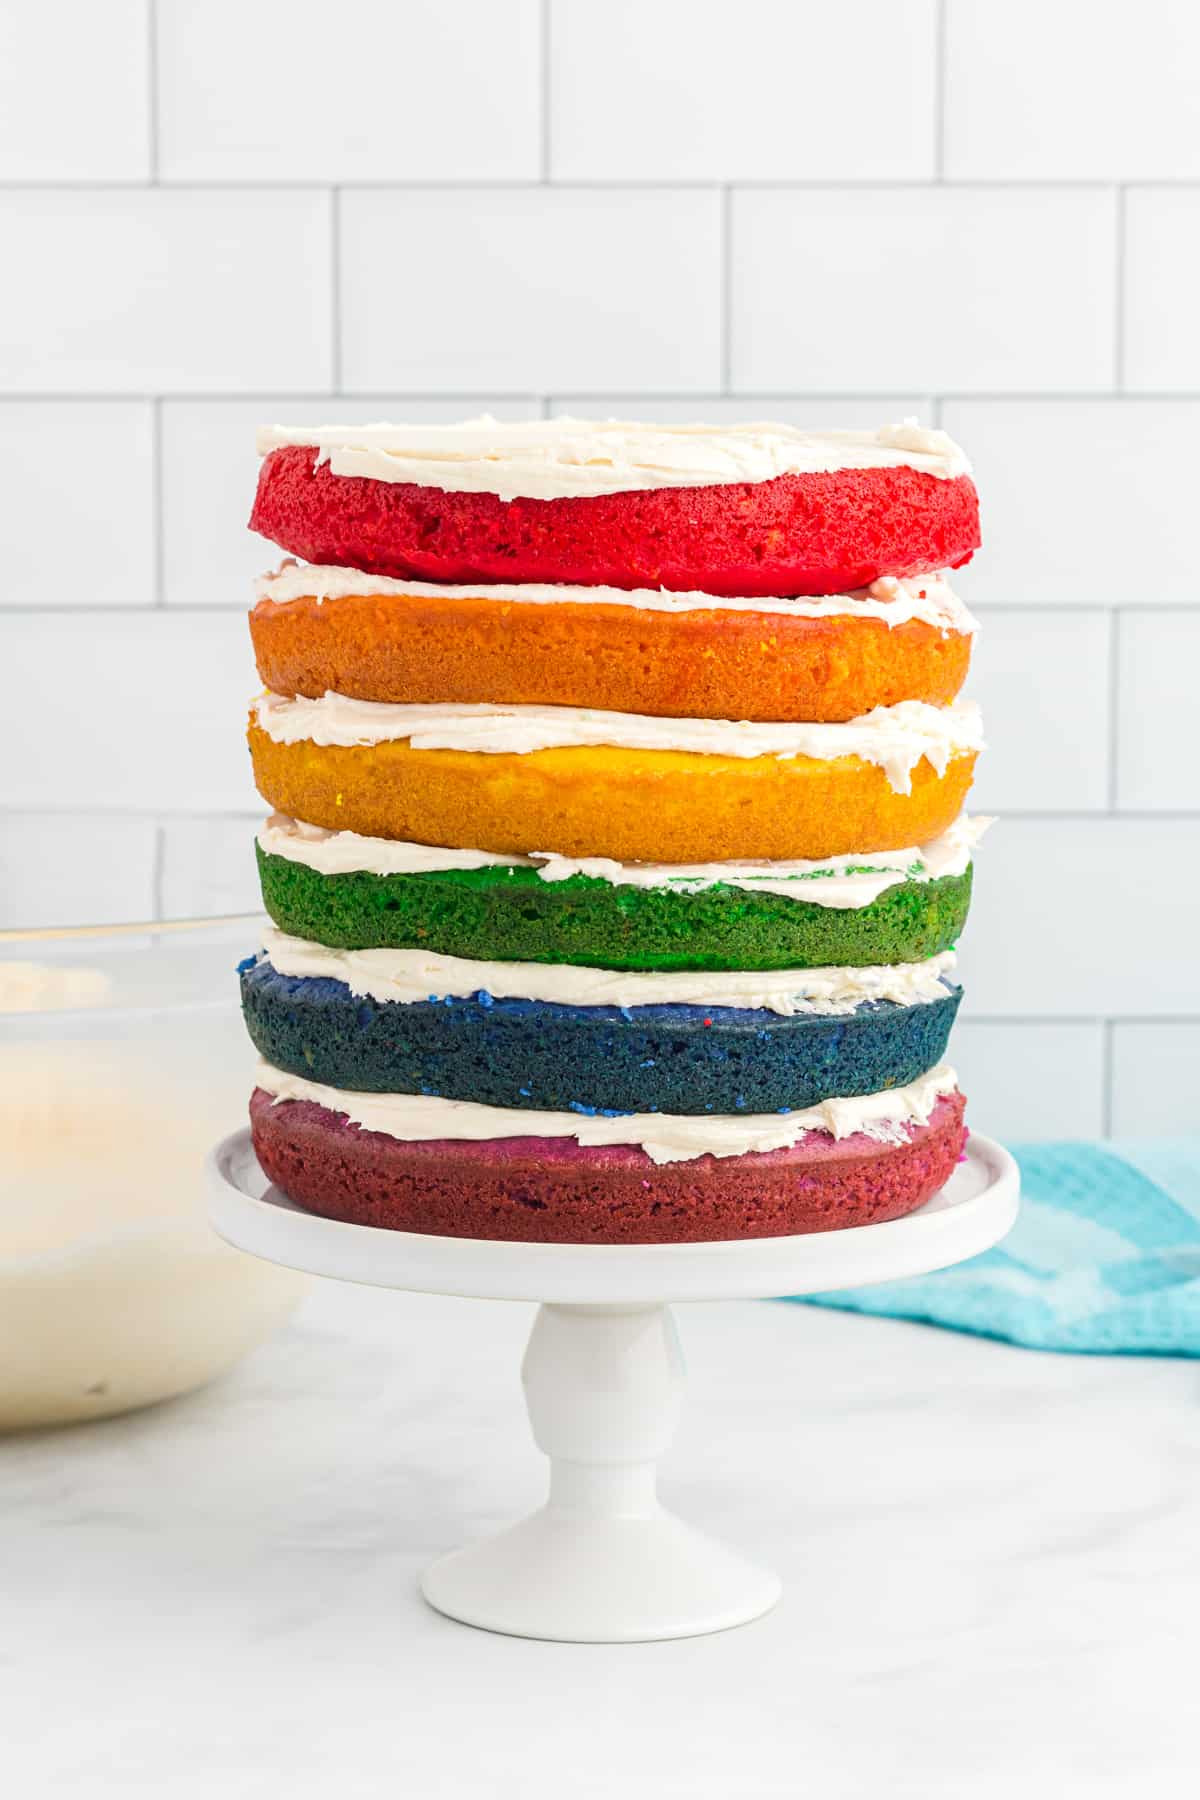 Edible Glitter MAGIC WHITE Cake Sparkles food decorating 1/4 oz OH SWEET ART